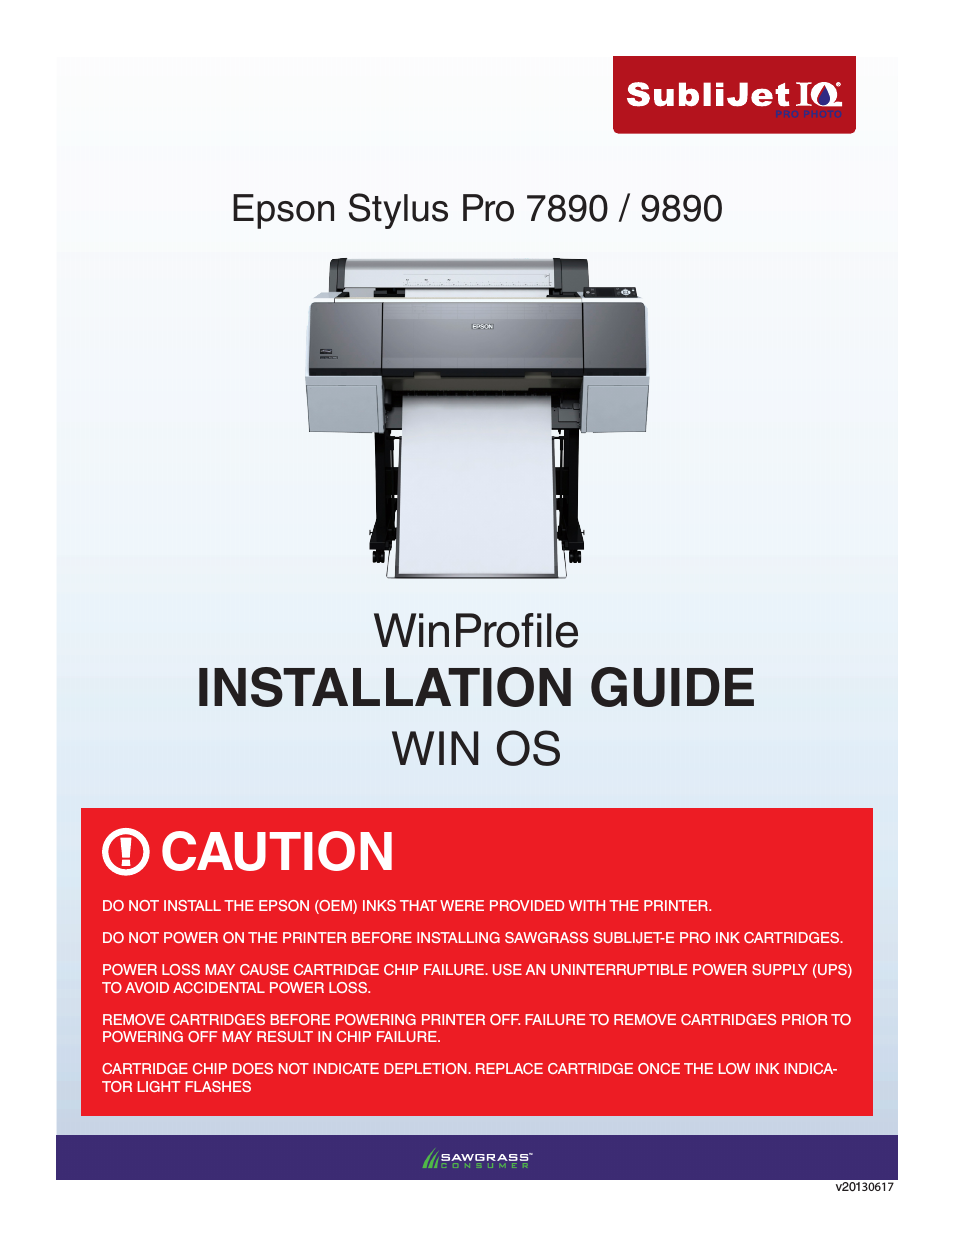 SubliJet IQ Epson Stylus Pro 9890 - IQ Pro Photo (Windows ICC Profile Setup): Printer/Profile Installation Guide